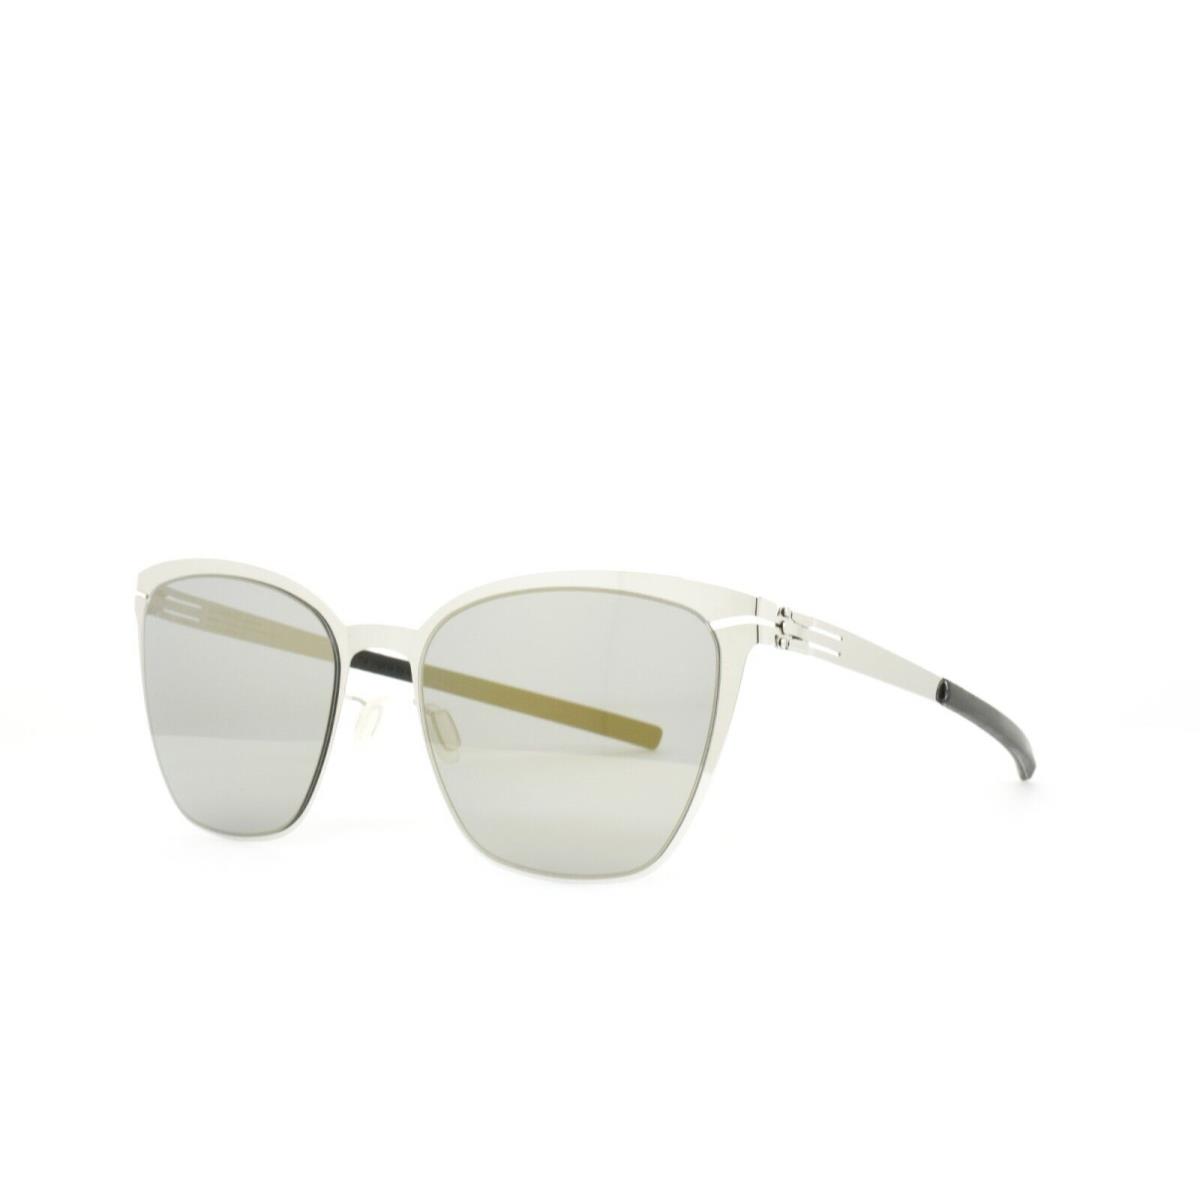 iC Berlin Sunglasses Birgit D. Chrome 53-19-145